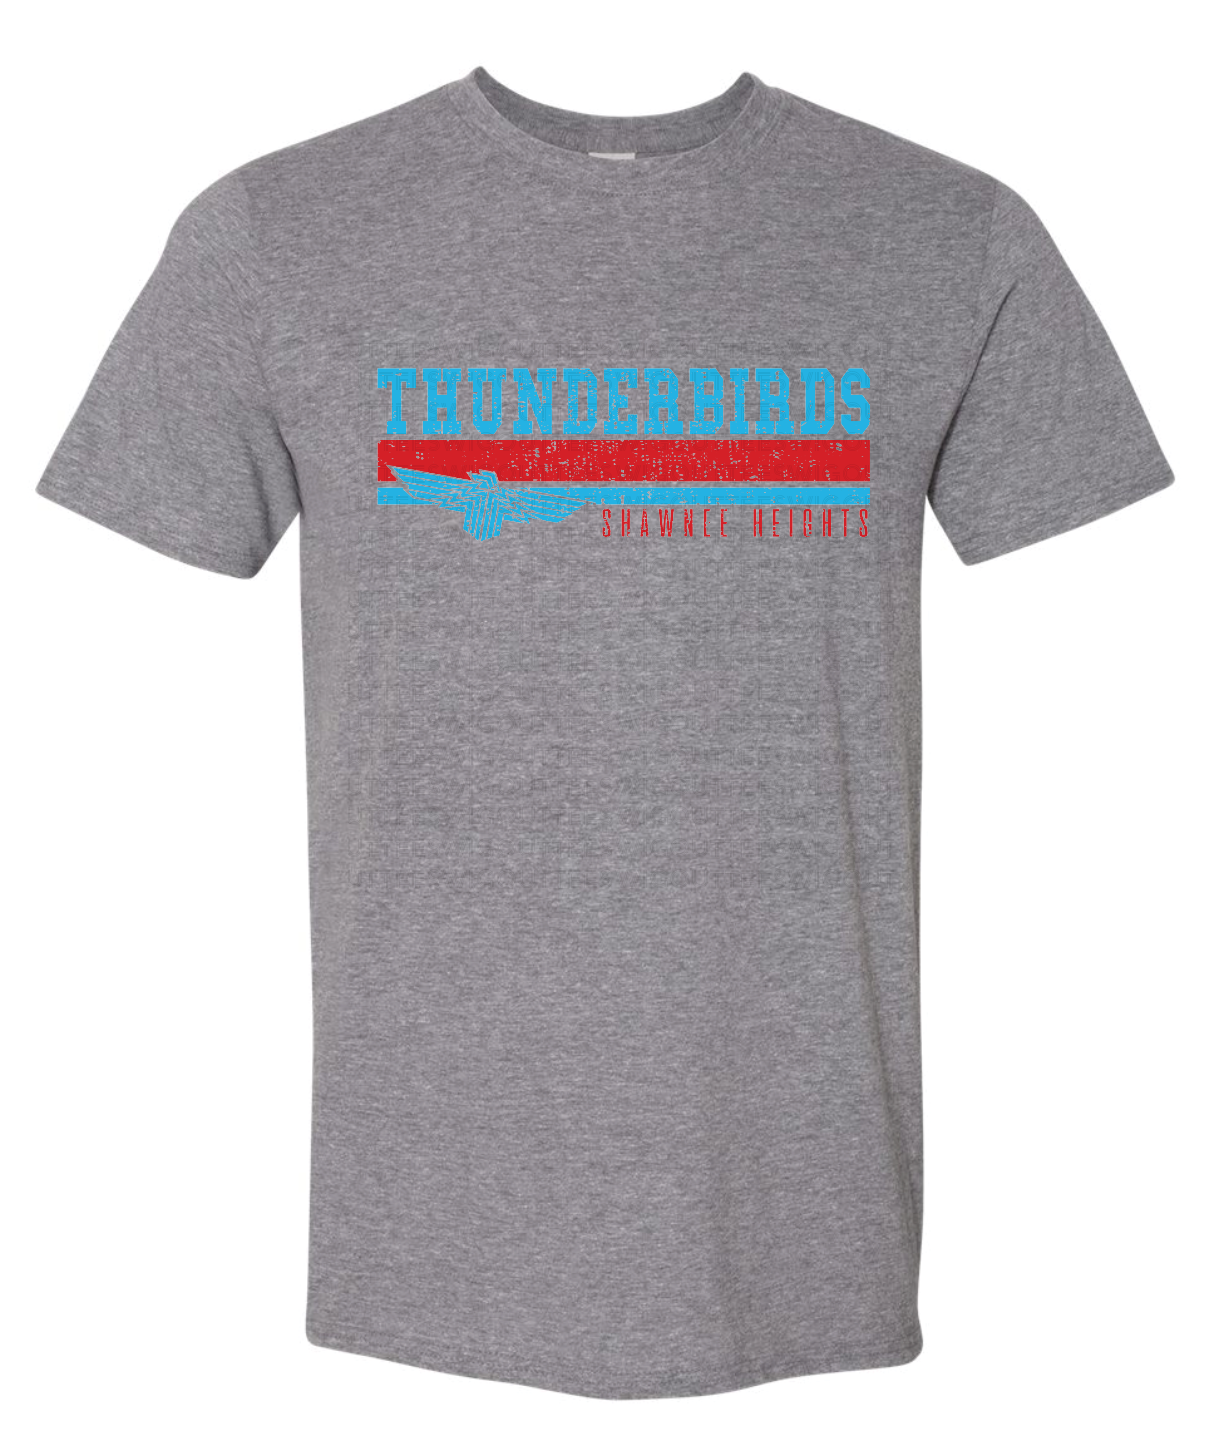 Thunderbirds Gildan Softstyle T-Shirt